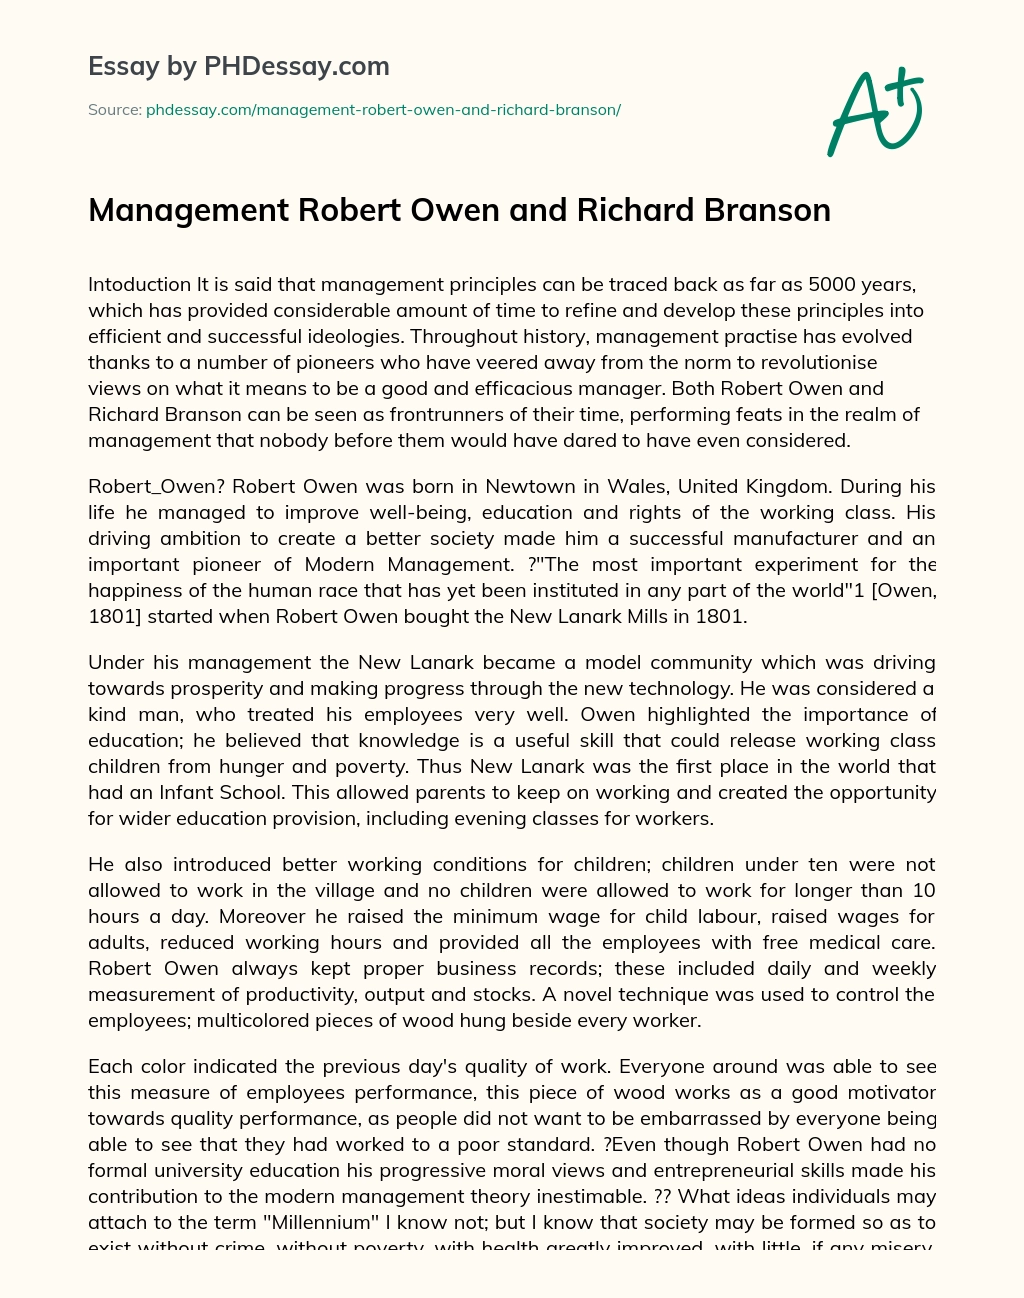 Management Robert Owen and Richard Branson essay